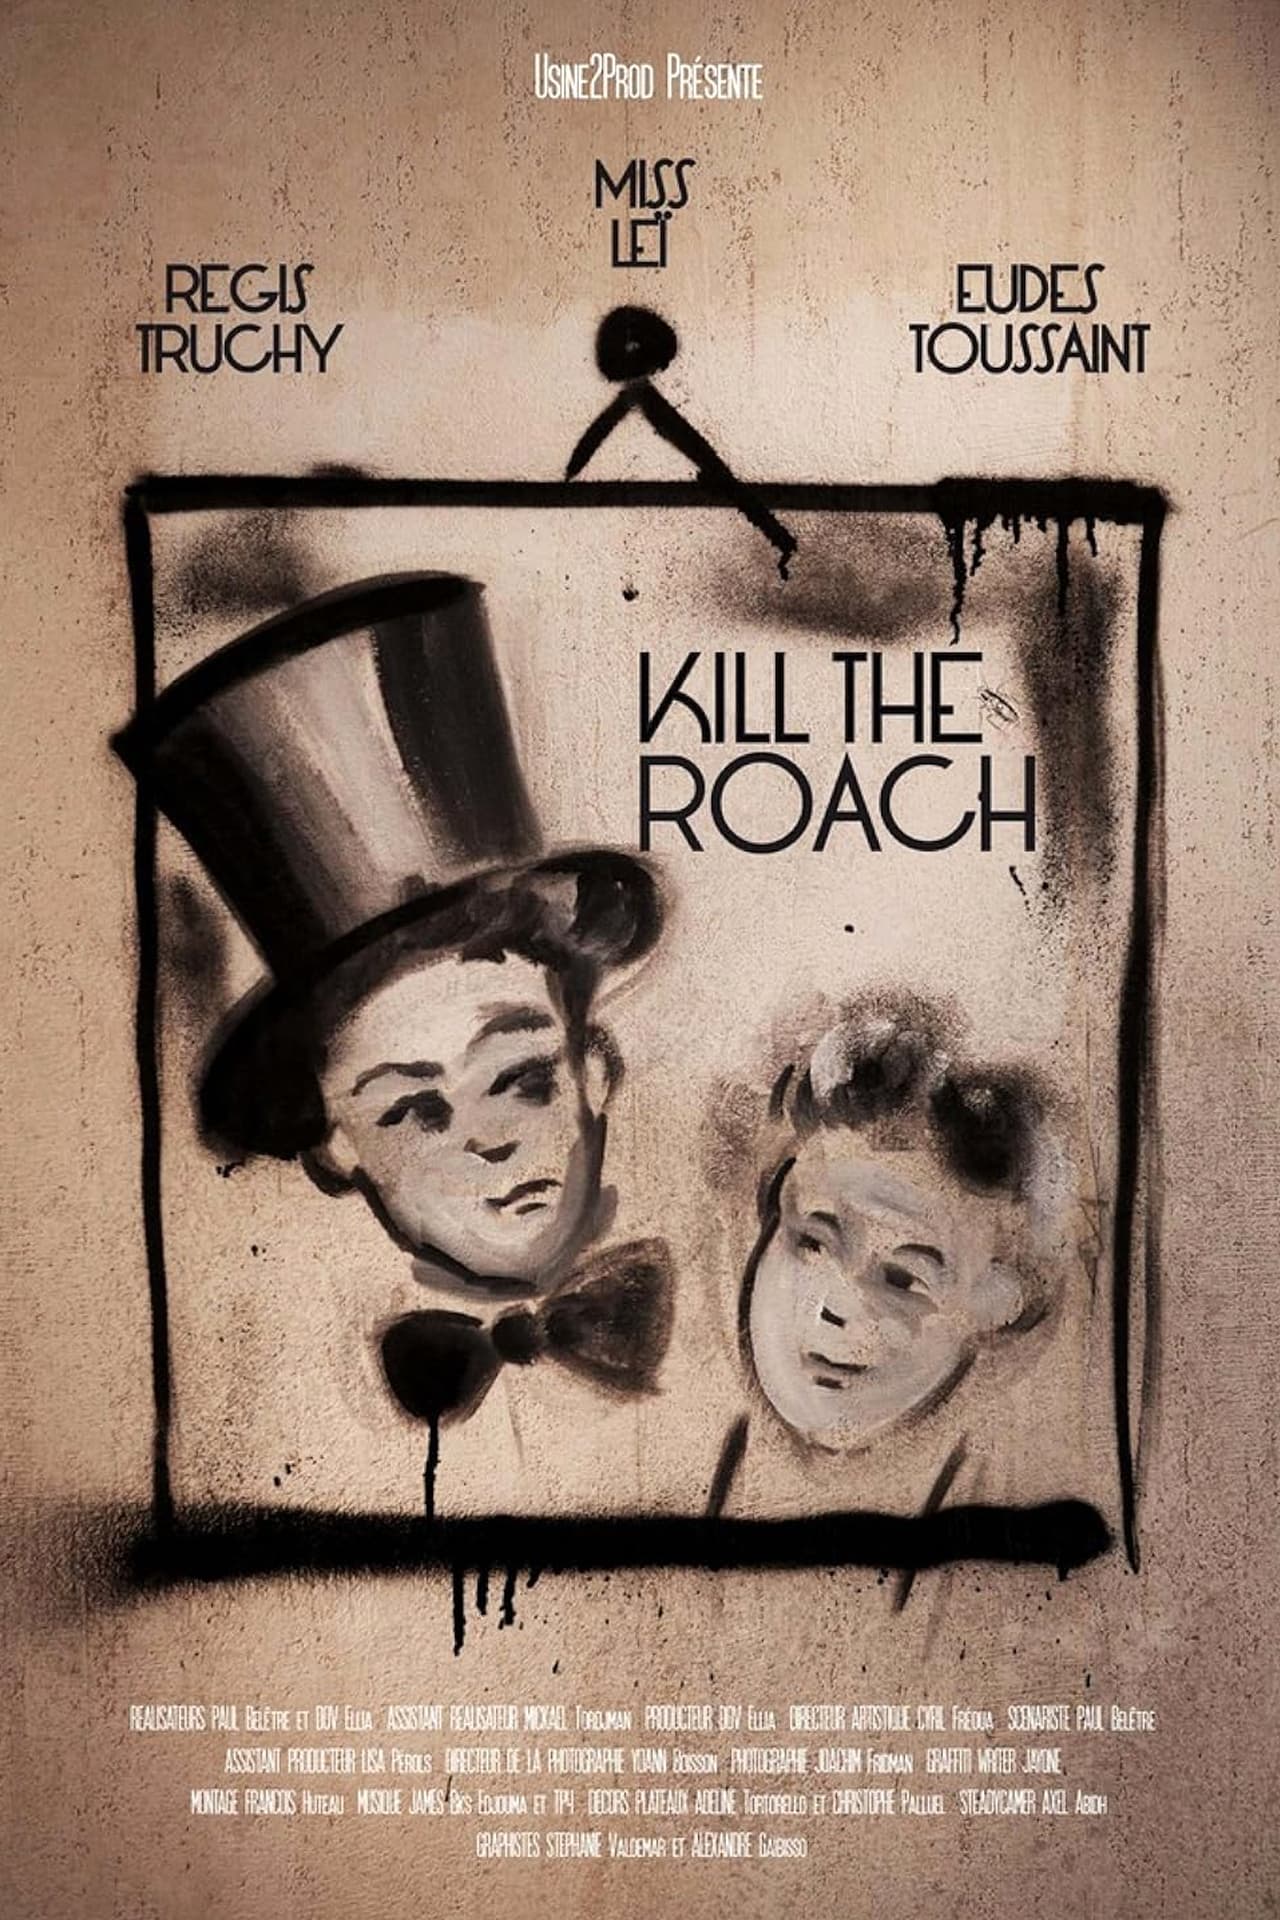 Kill the Roach - L'art du geste